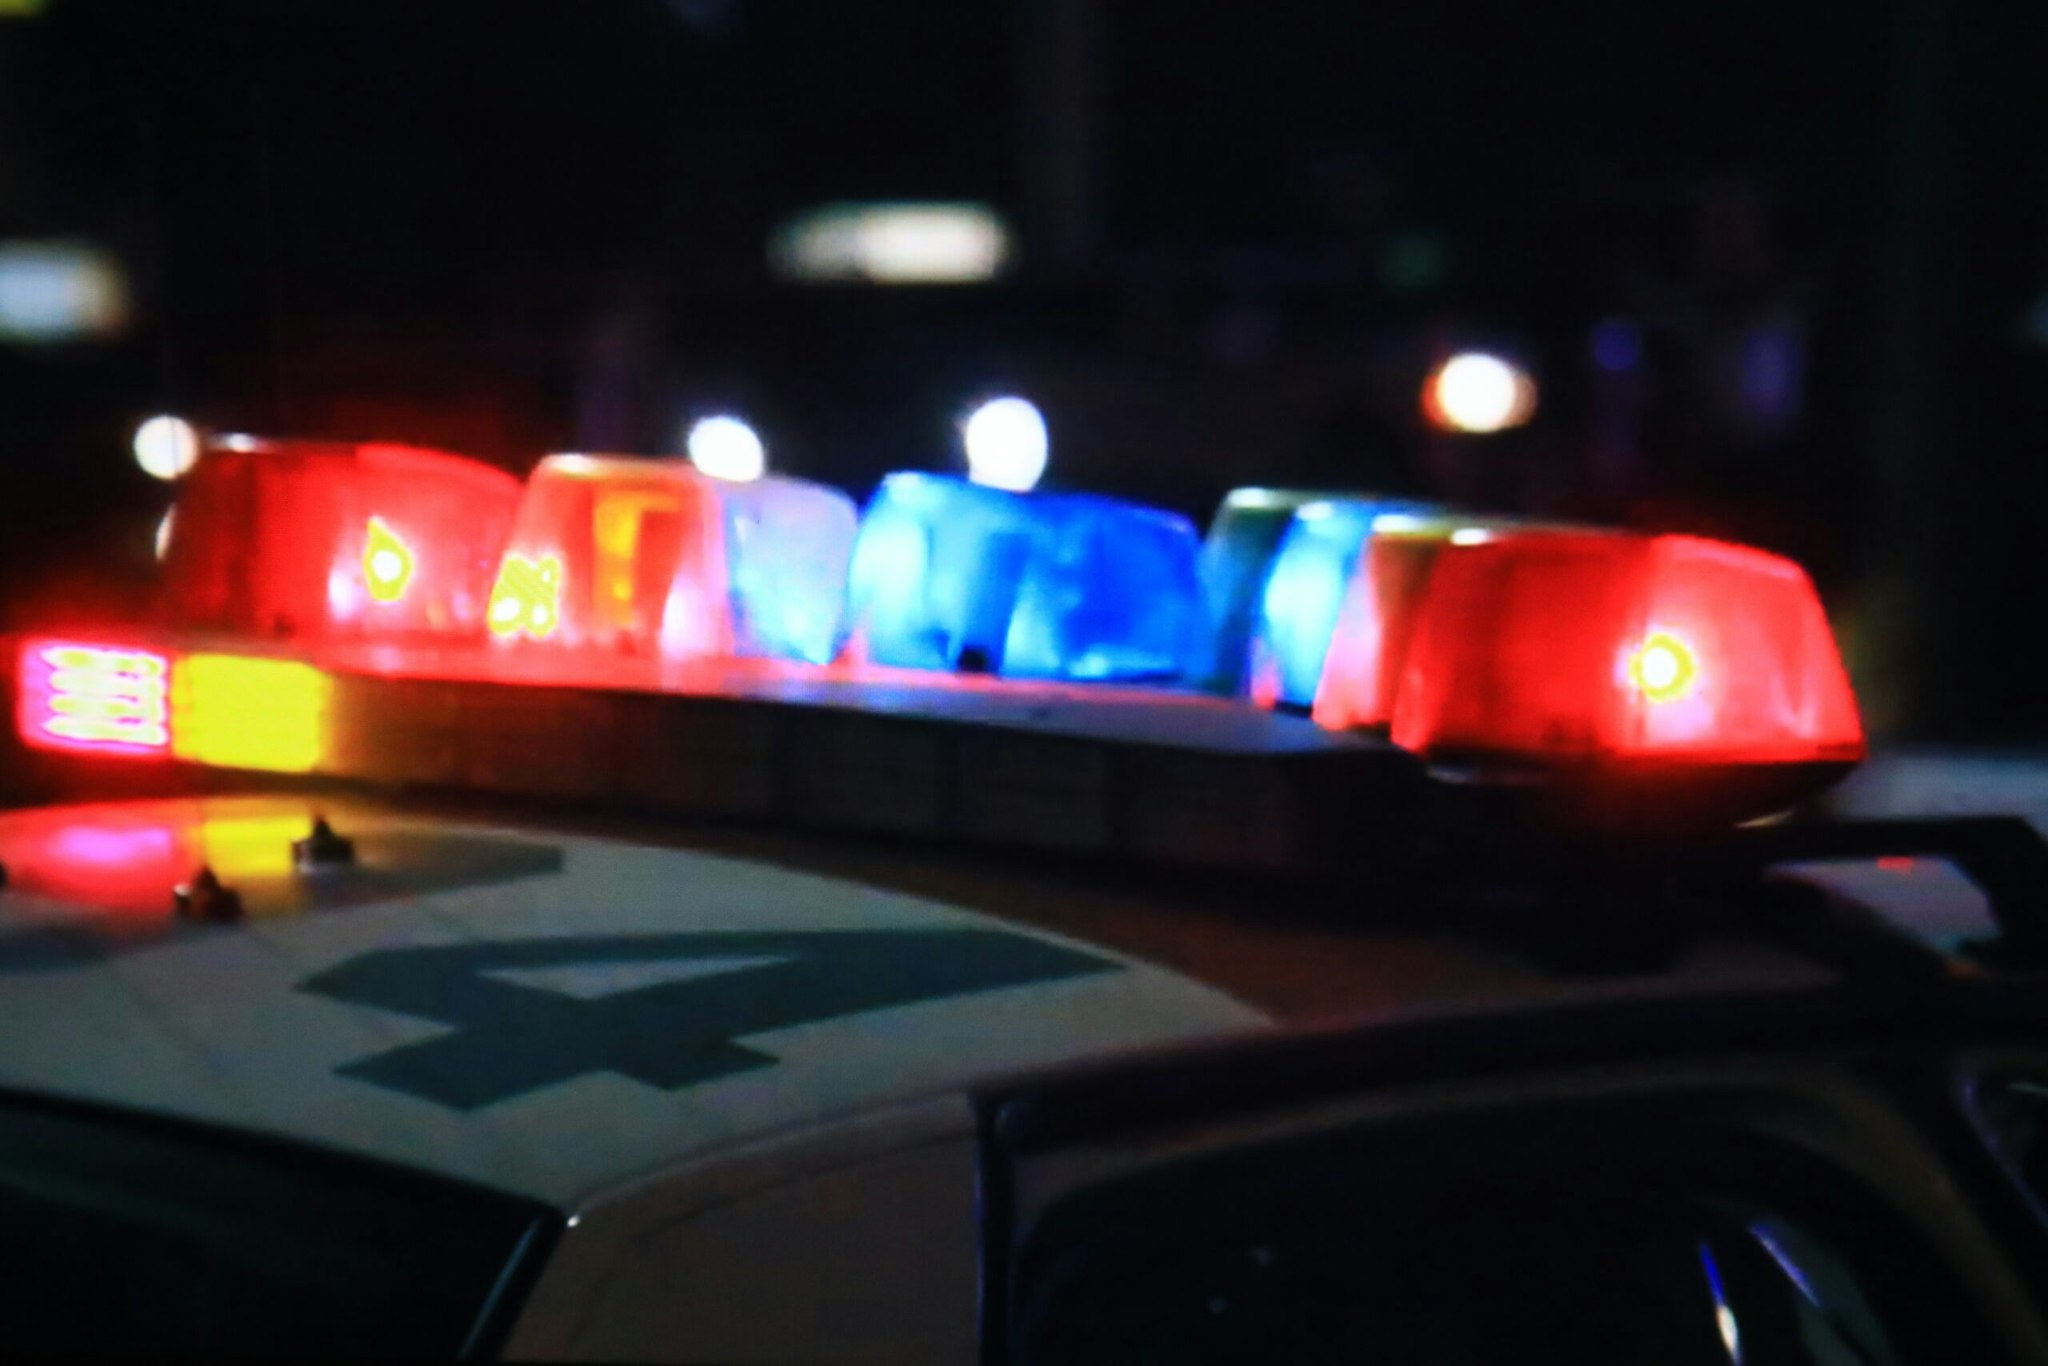 Flashing lights on a police car - stock photo